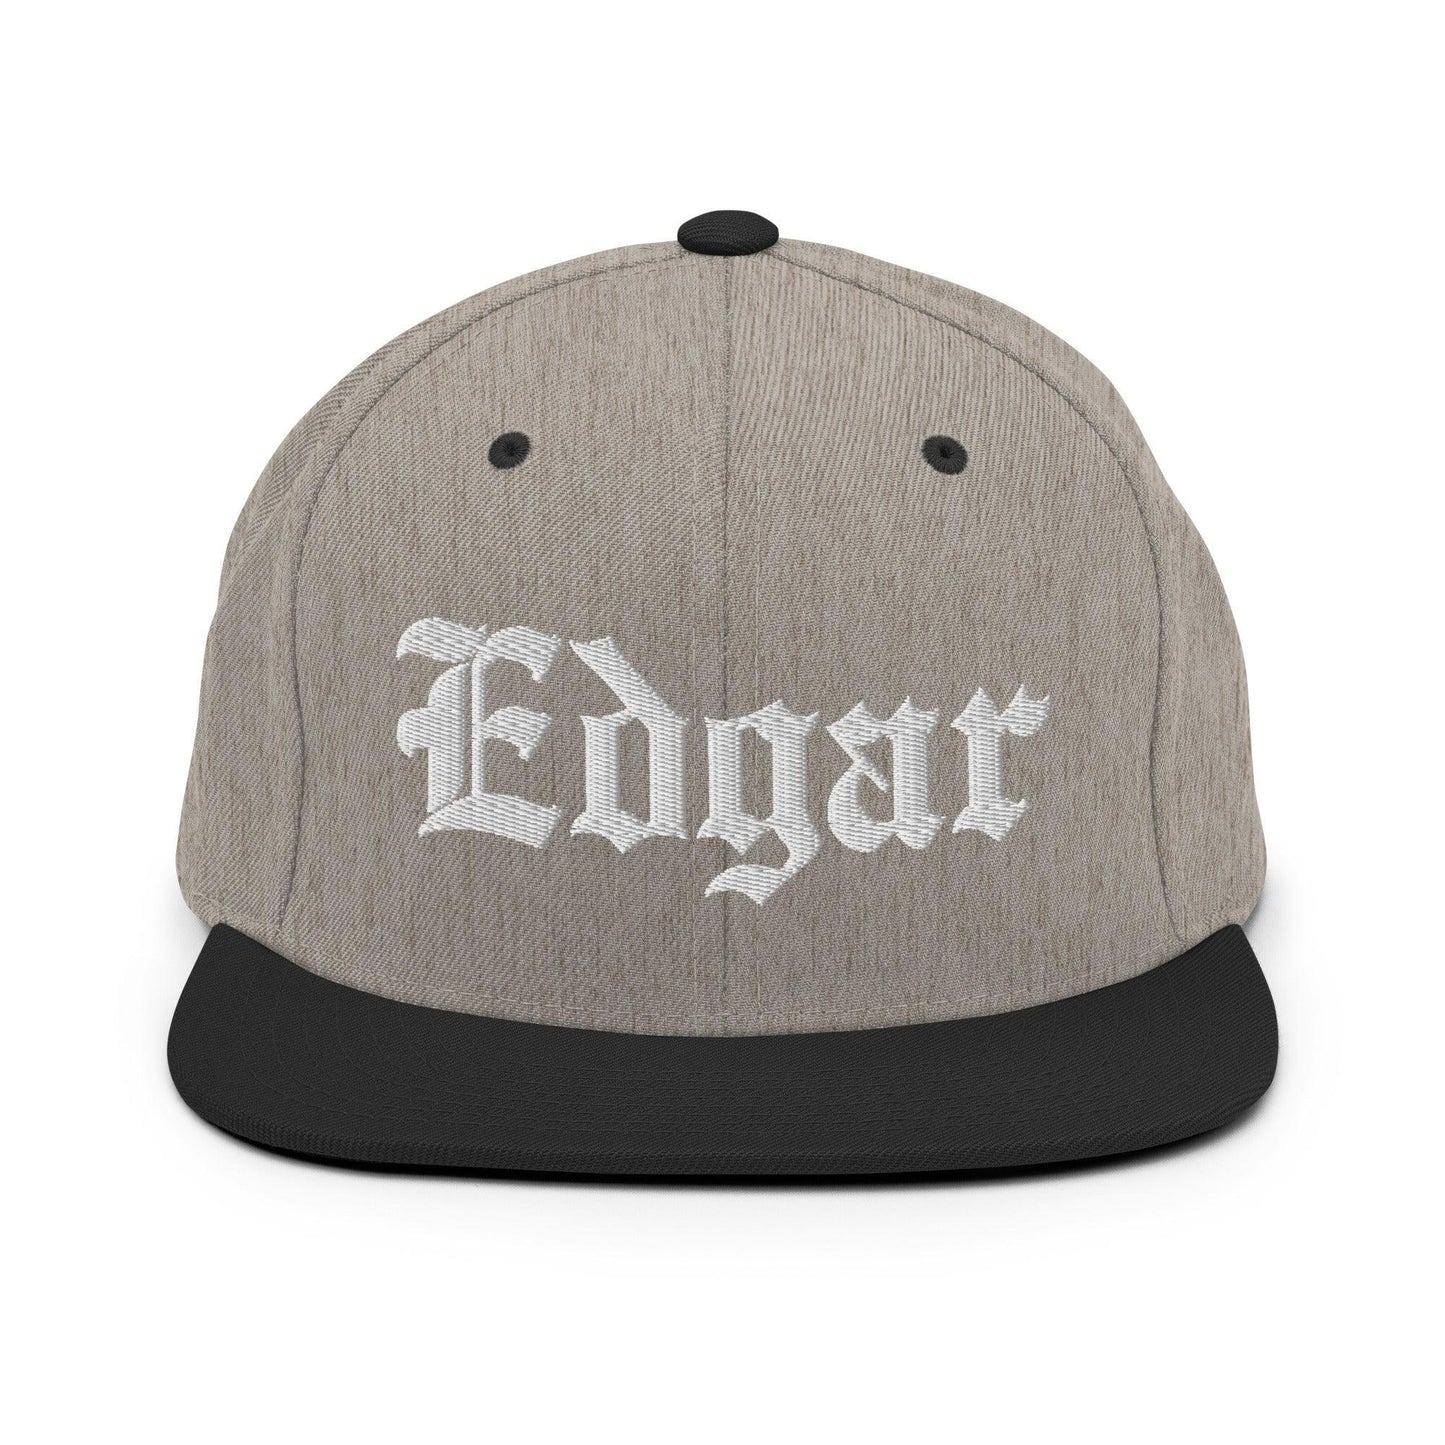 Edgar Old English Snapback Hat Heather/Black